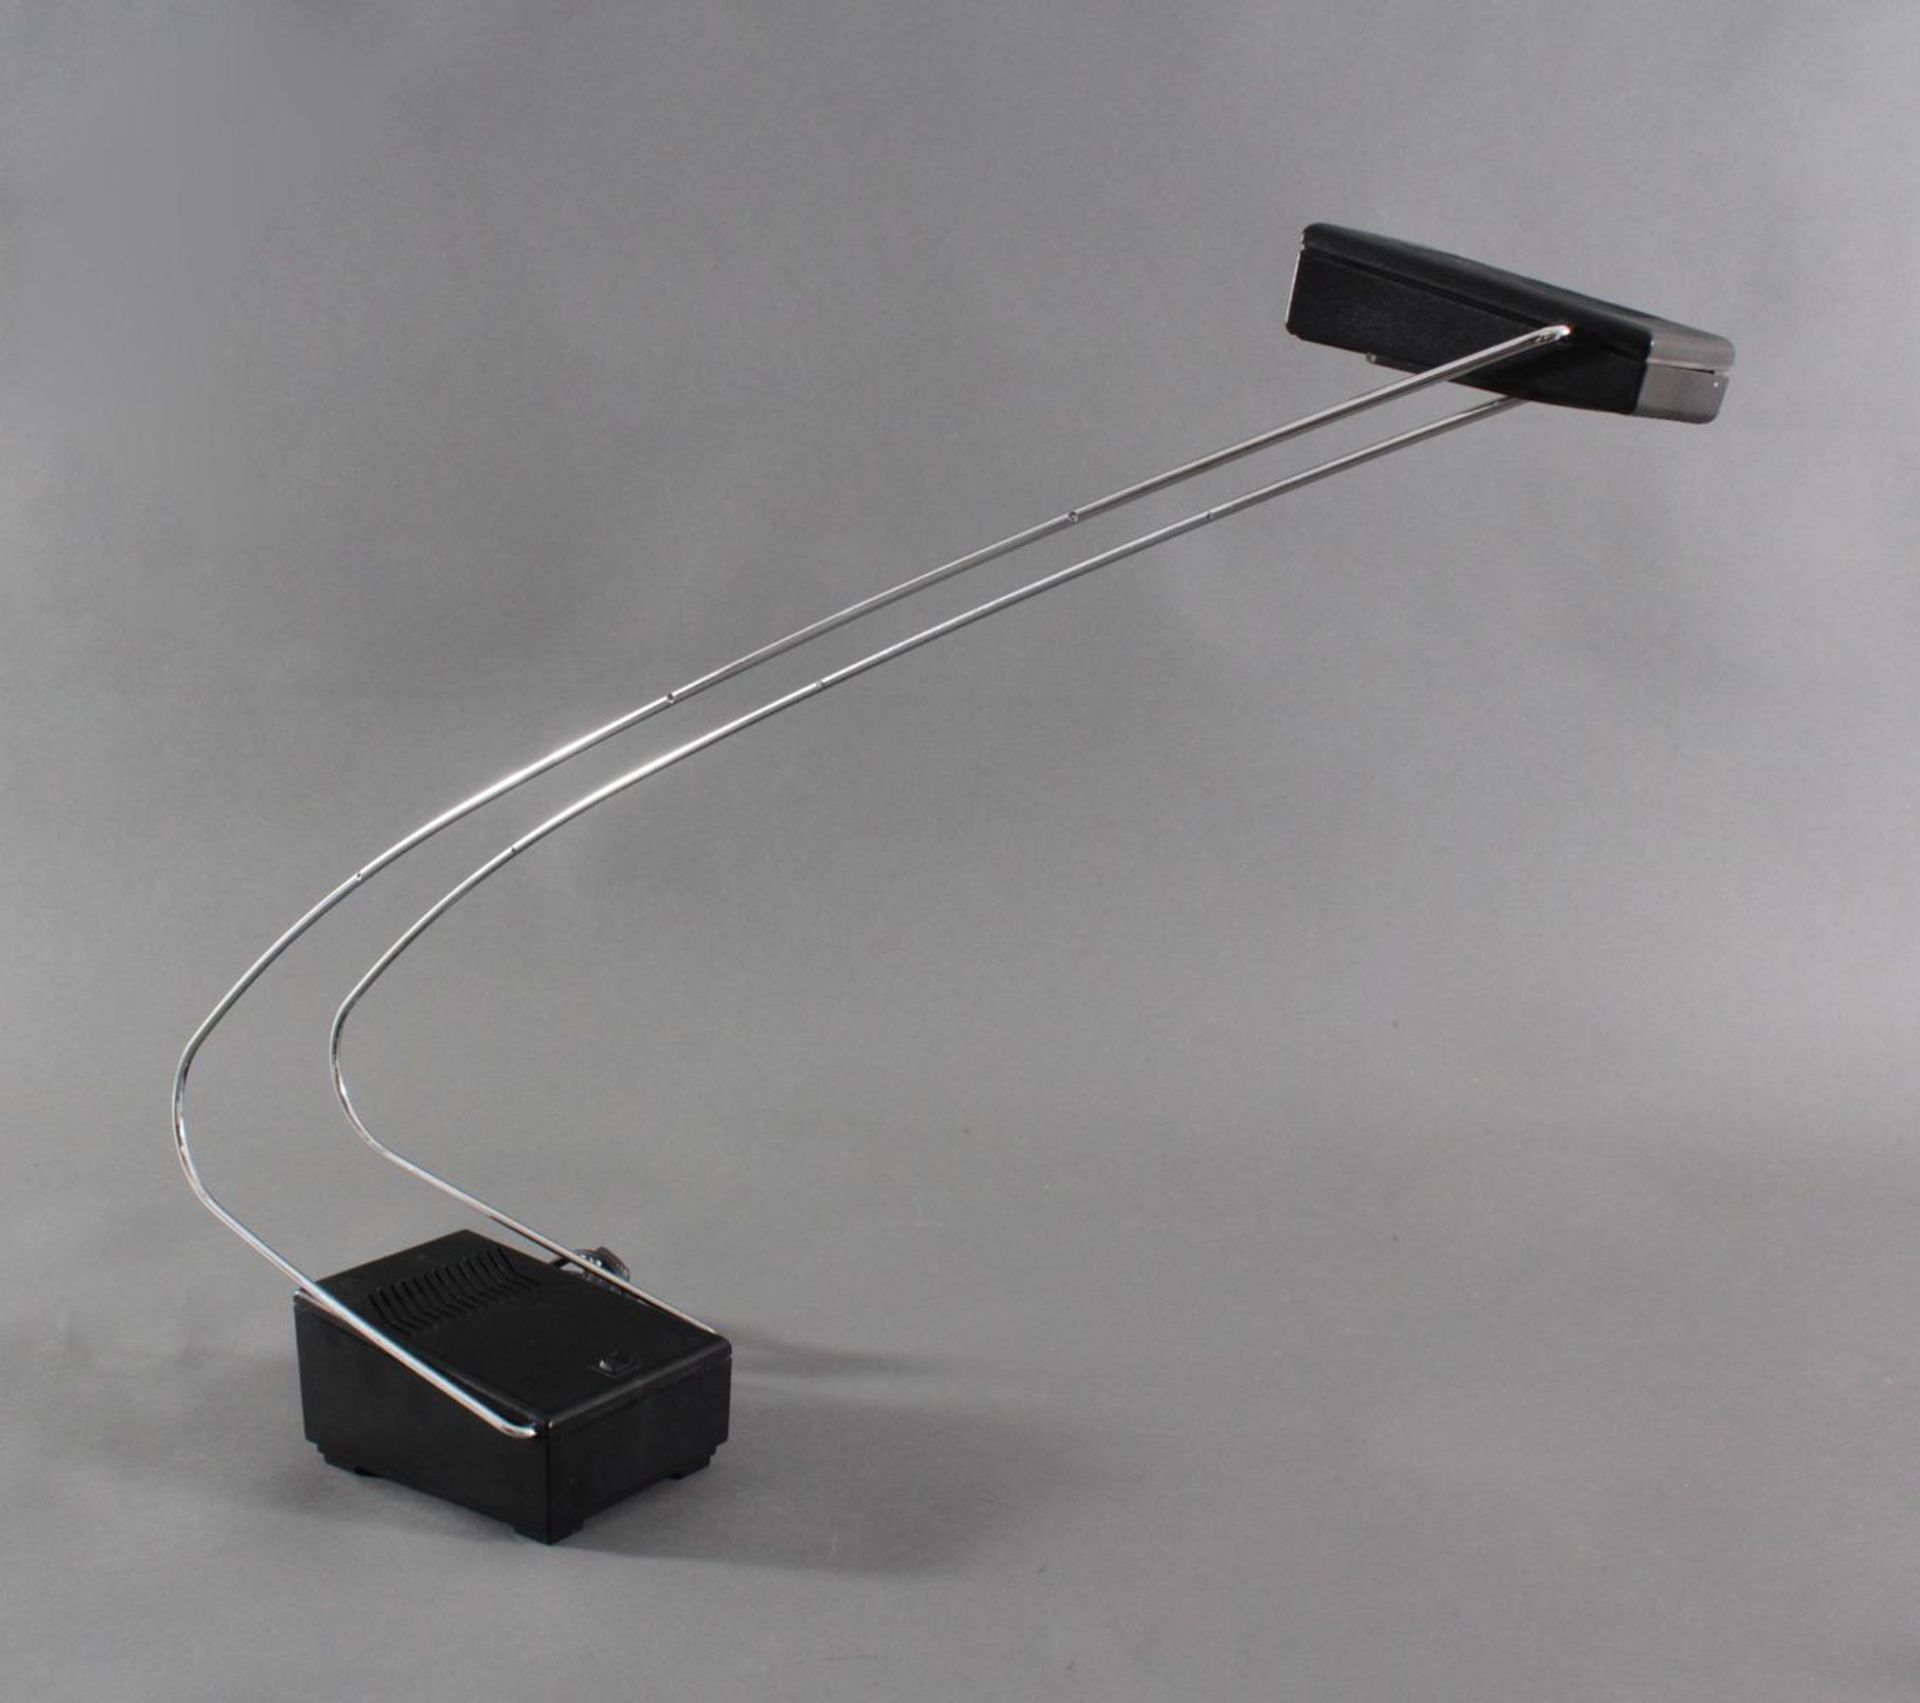 Designer Tischlampe, 80er JahreKunststoff/Metall. Lampe mit Halogen Beleuchtung, ca. H-52 cm. - Image 3 of 3